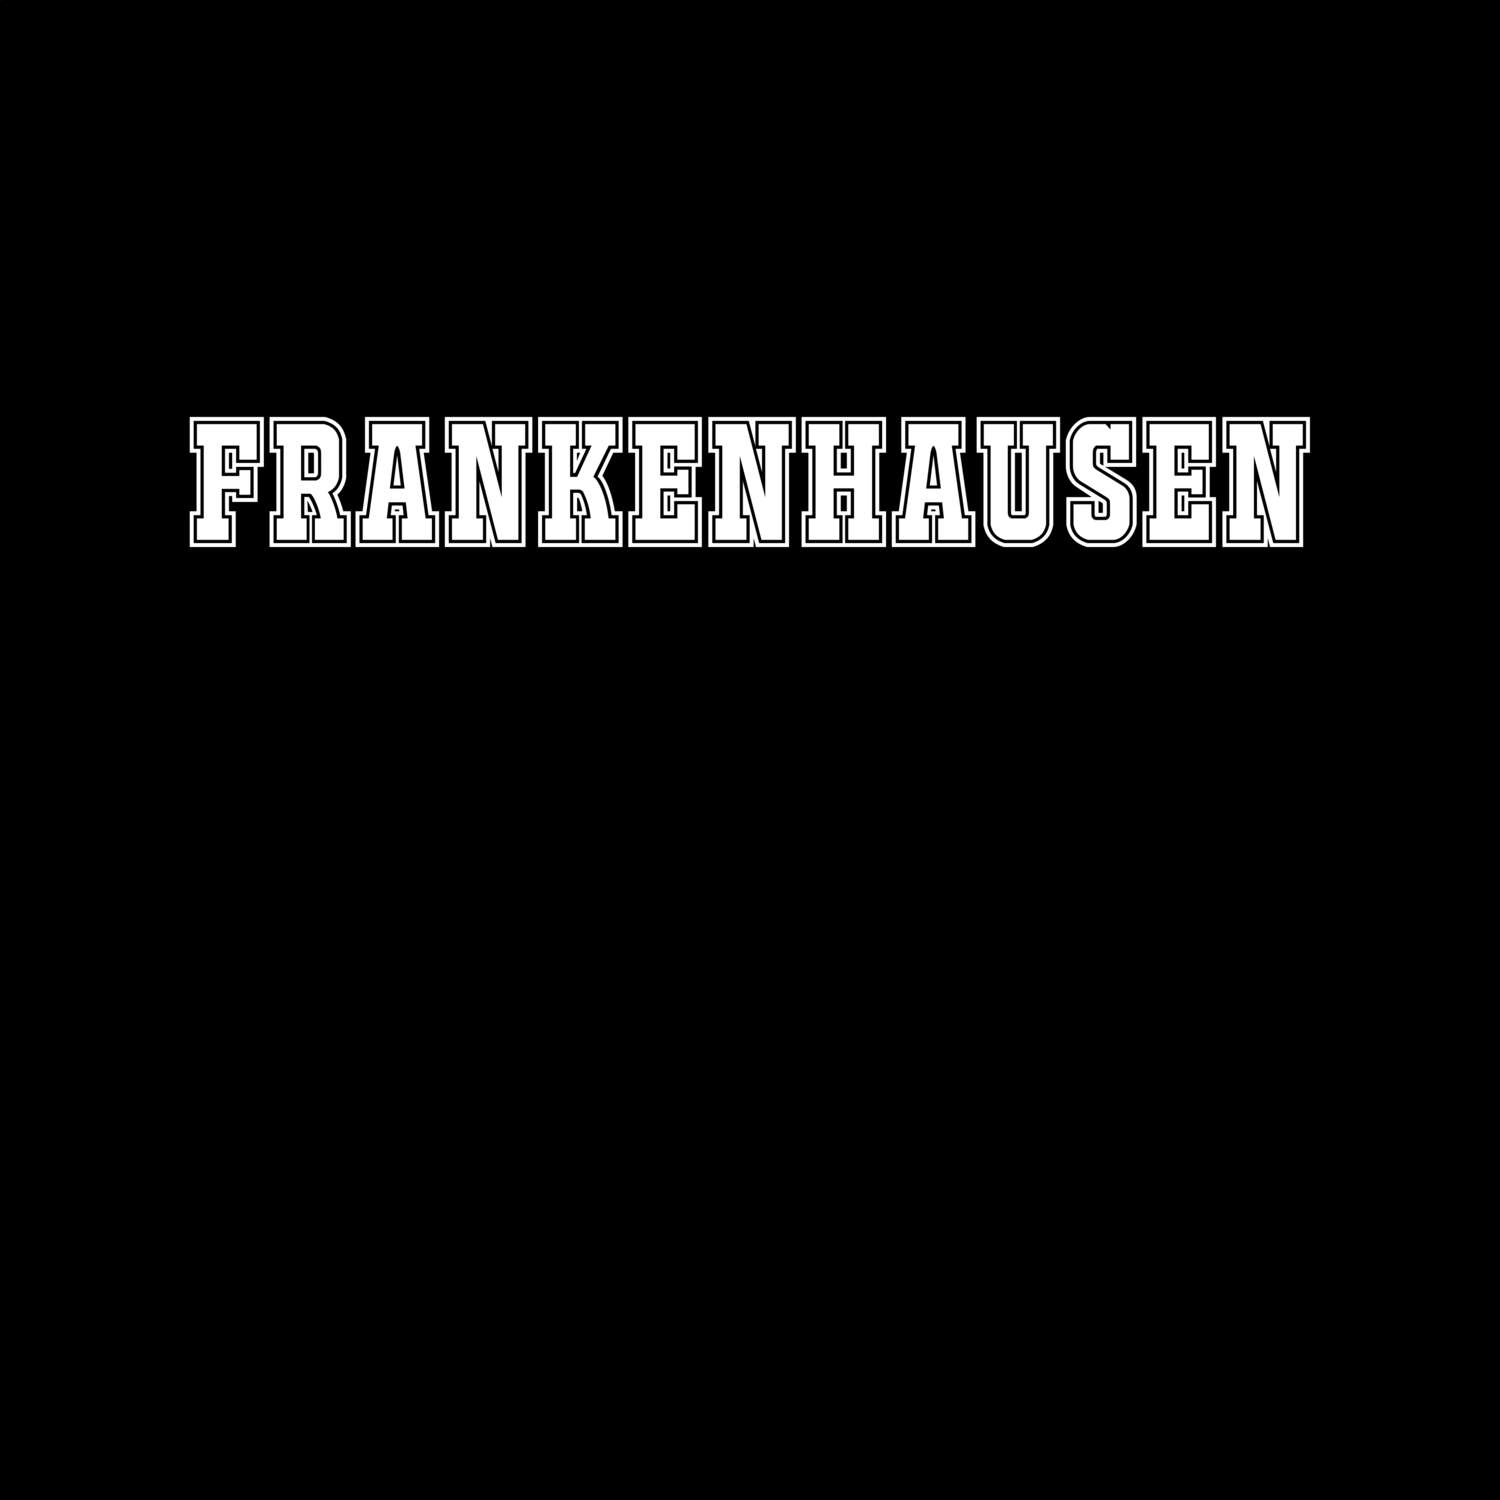 Frankenhausen T-Shirt »Classic«